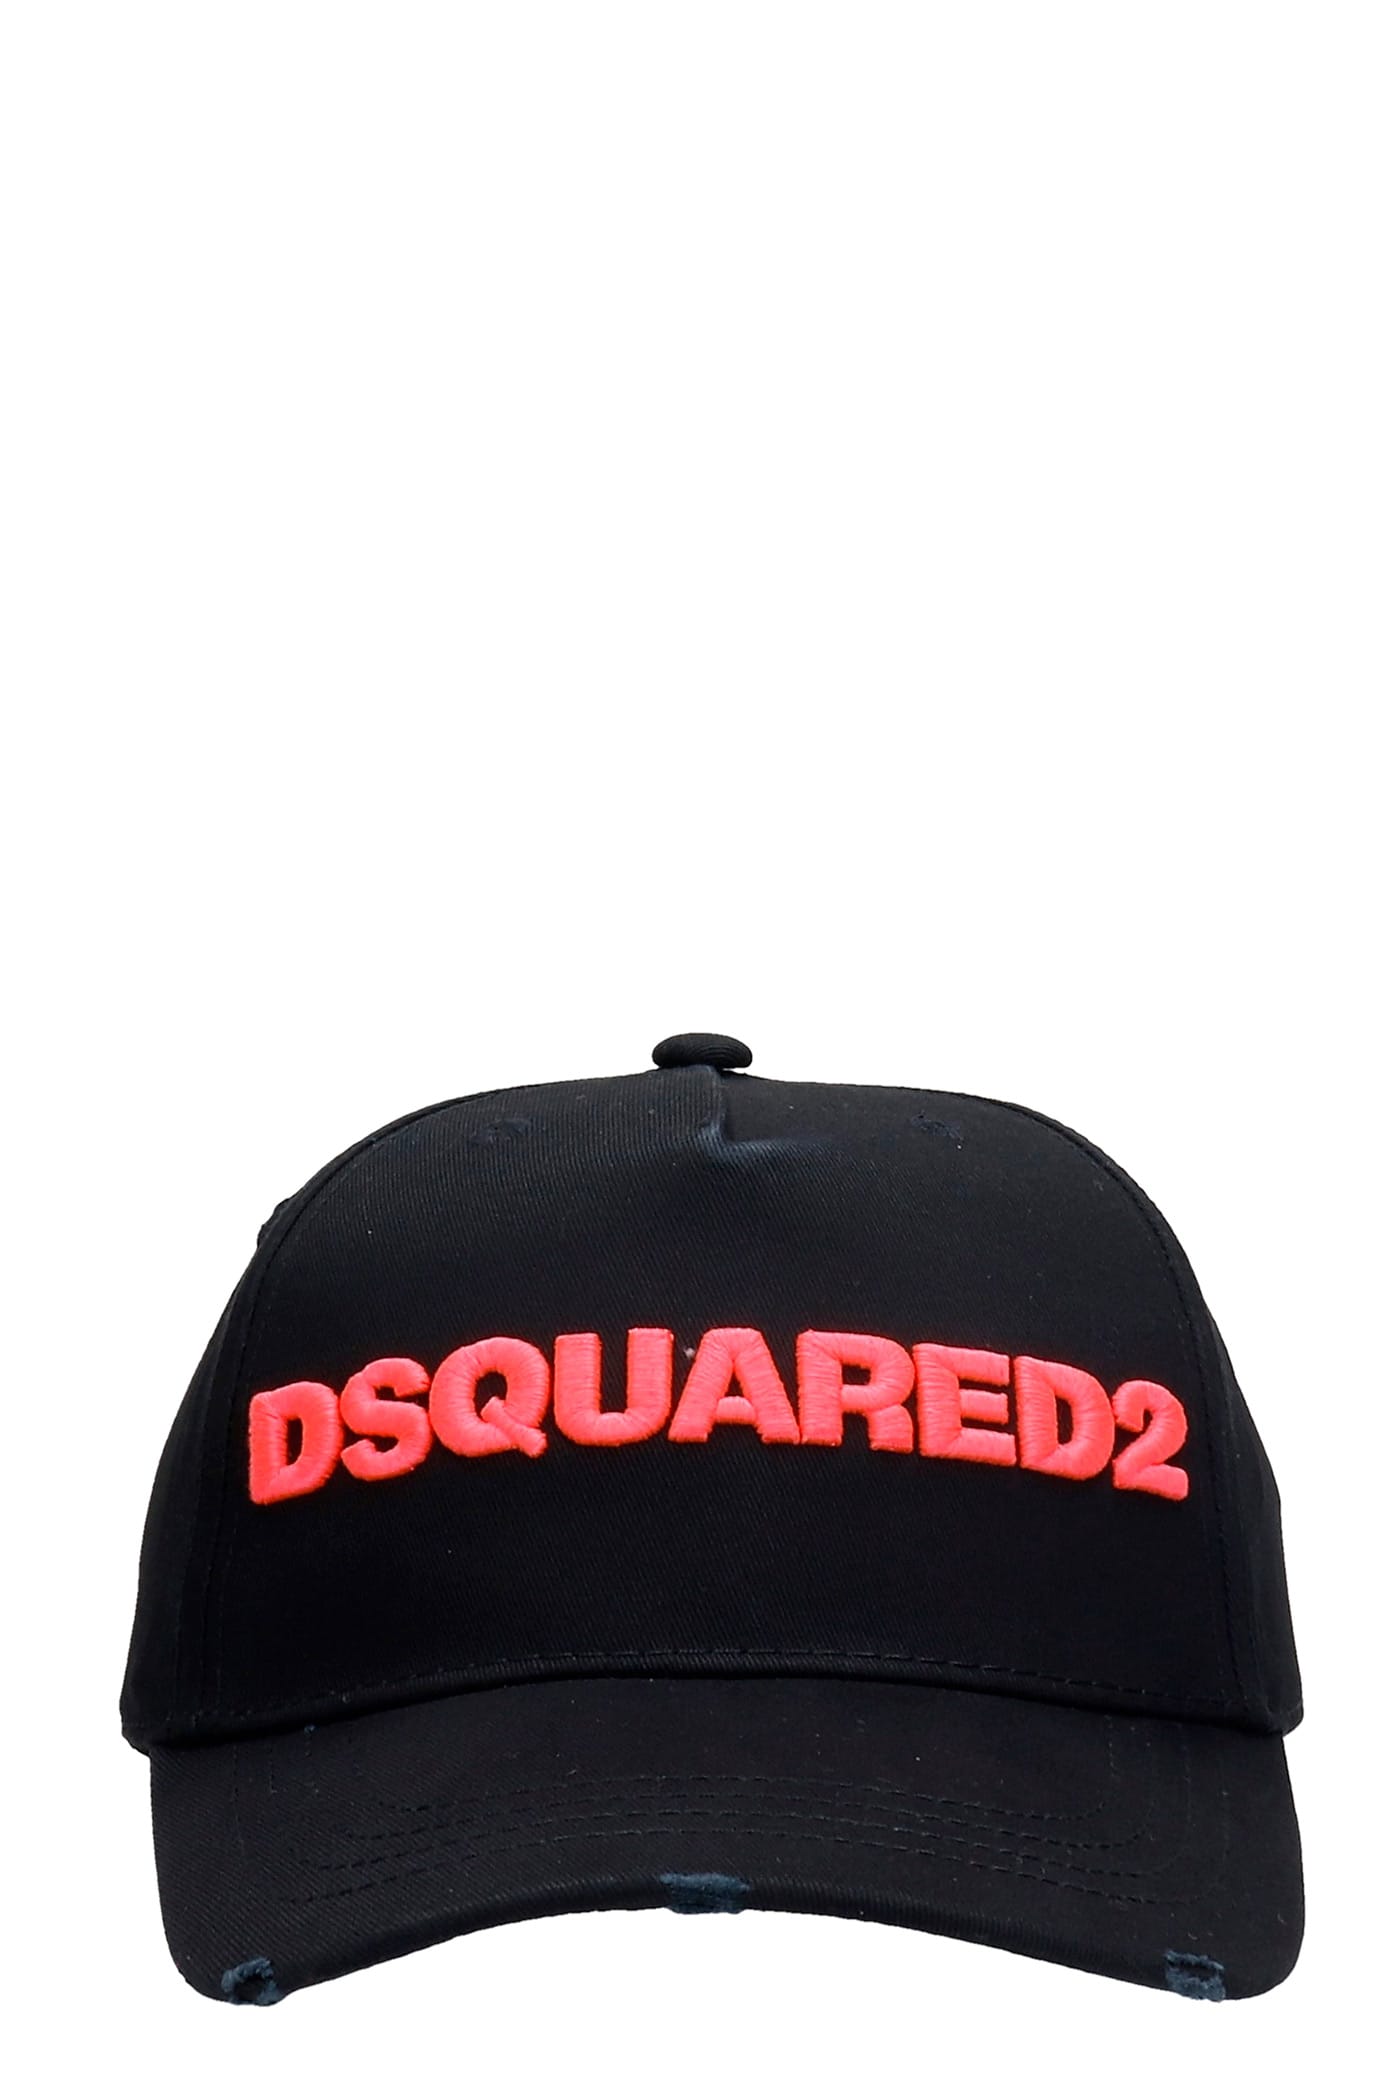 DSQUARED2 HATS IN BLACK COTTON DSQUARED2,11775751